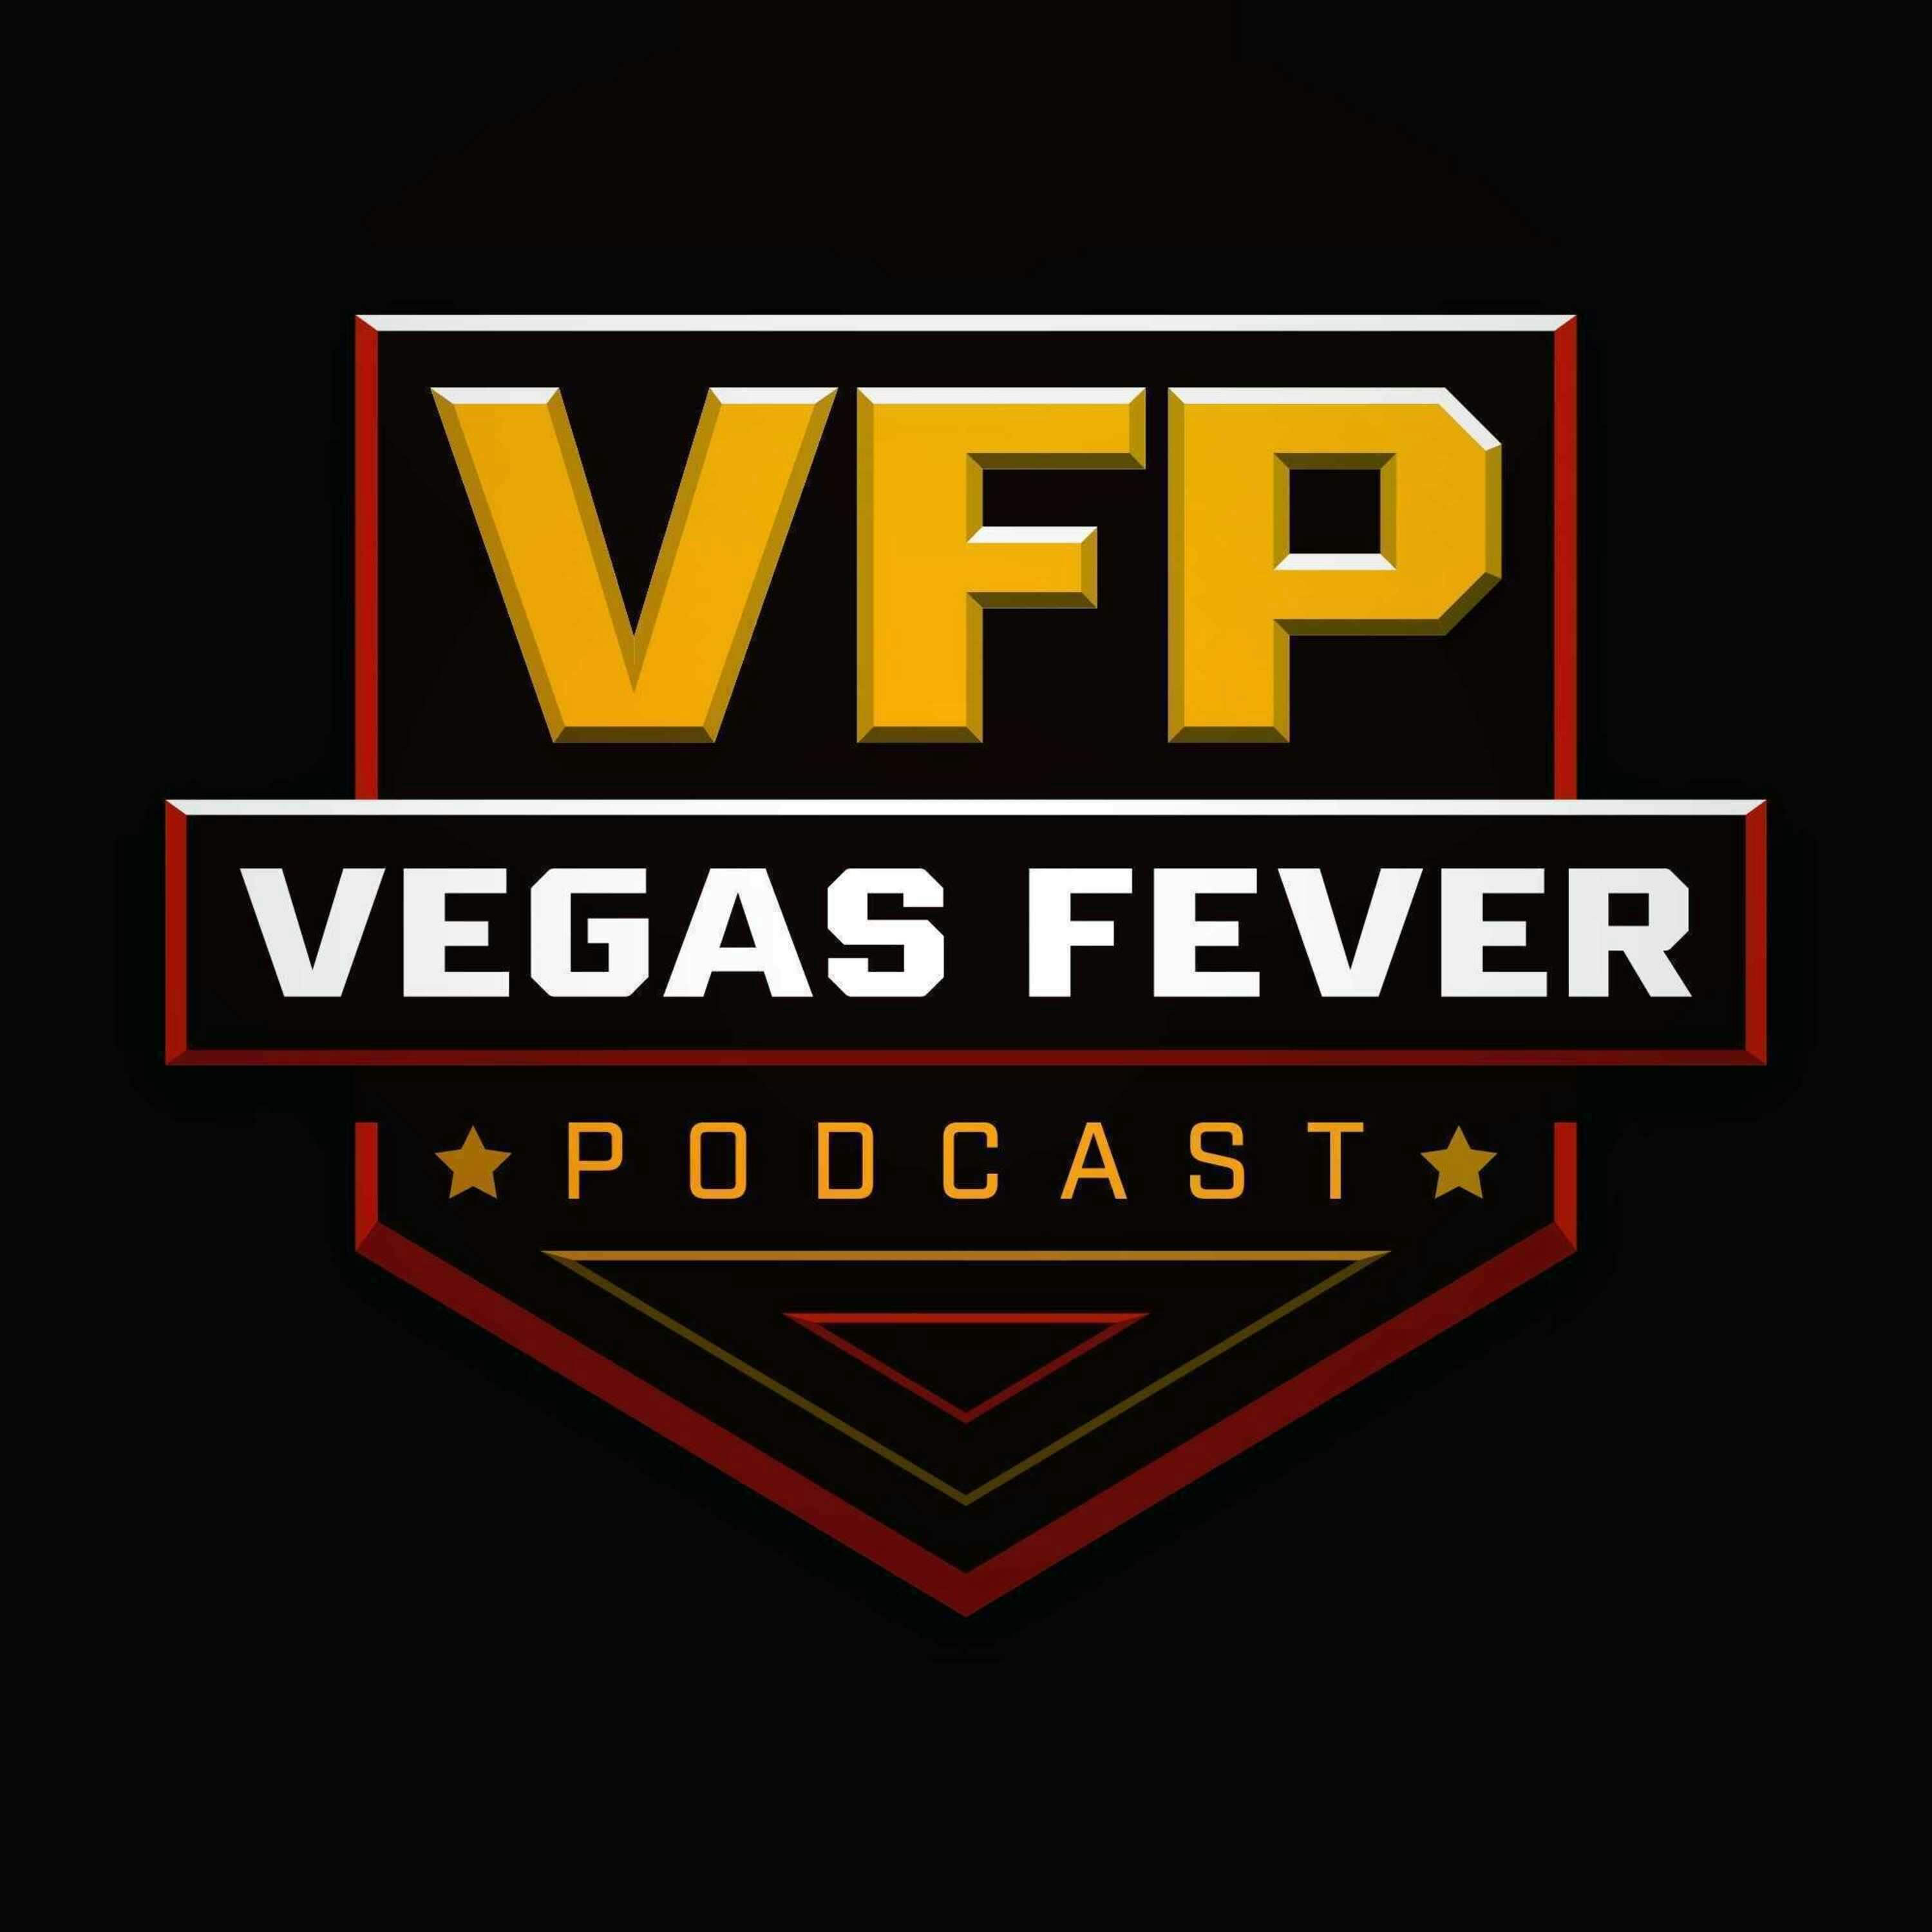 UNLV, VGK and NBA to Vegas Talk.